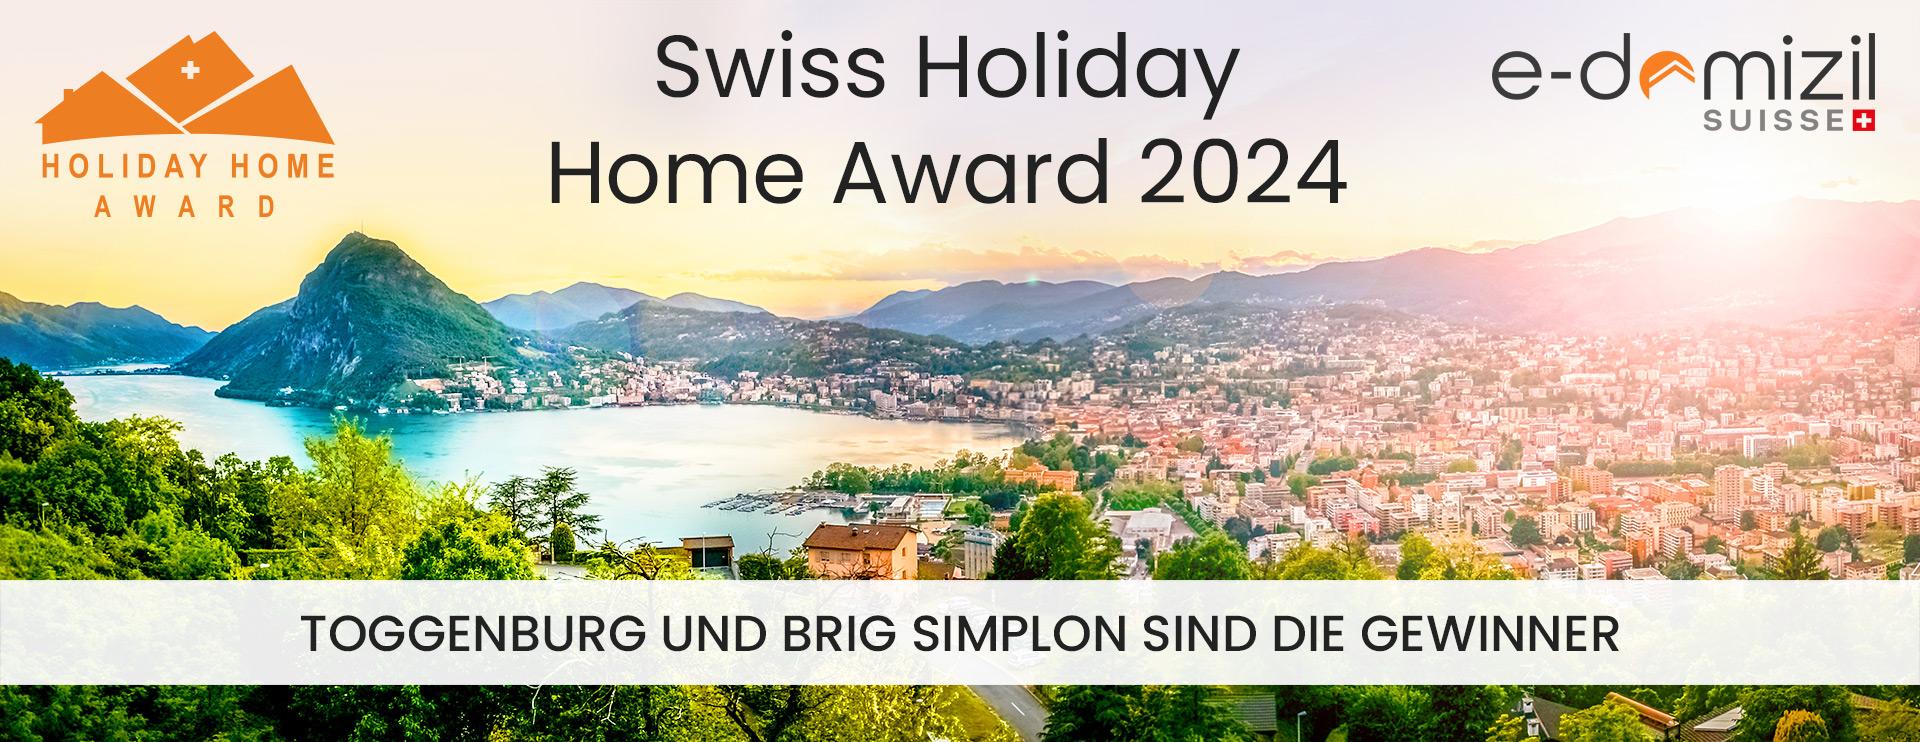 Swiss Holiday Home Award 